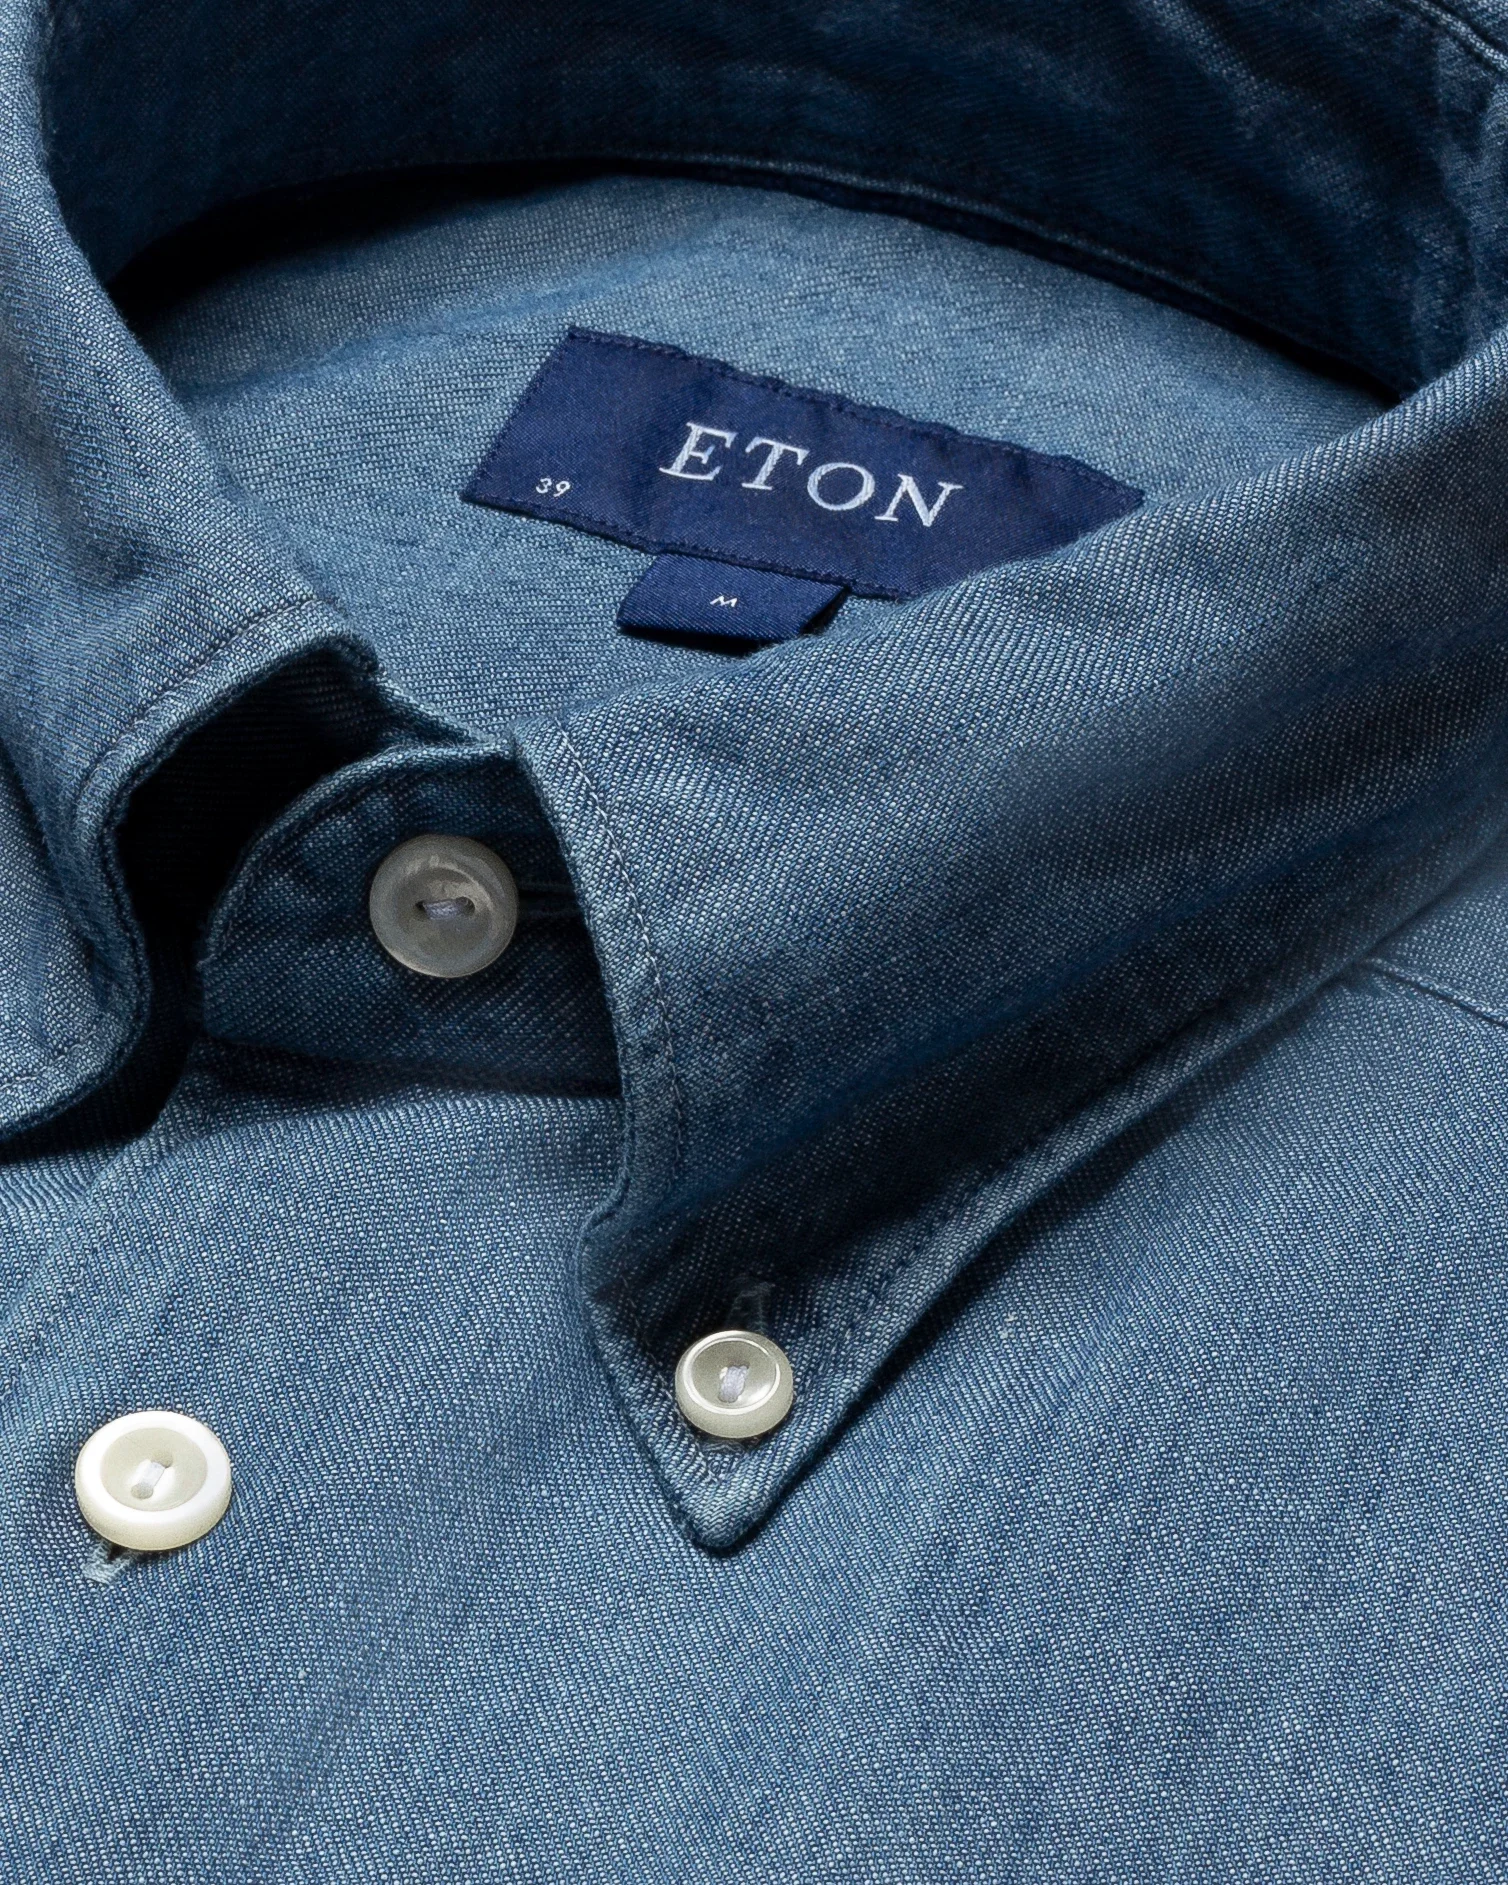 Eton - light blue denim shirt button down